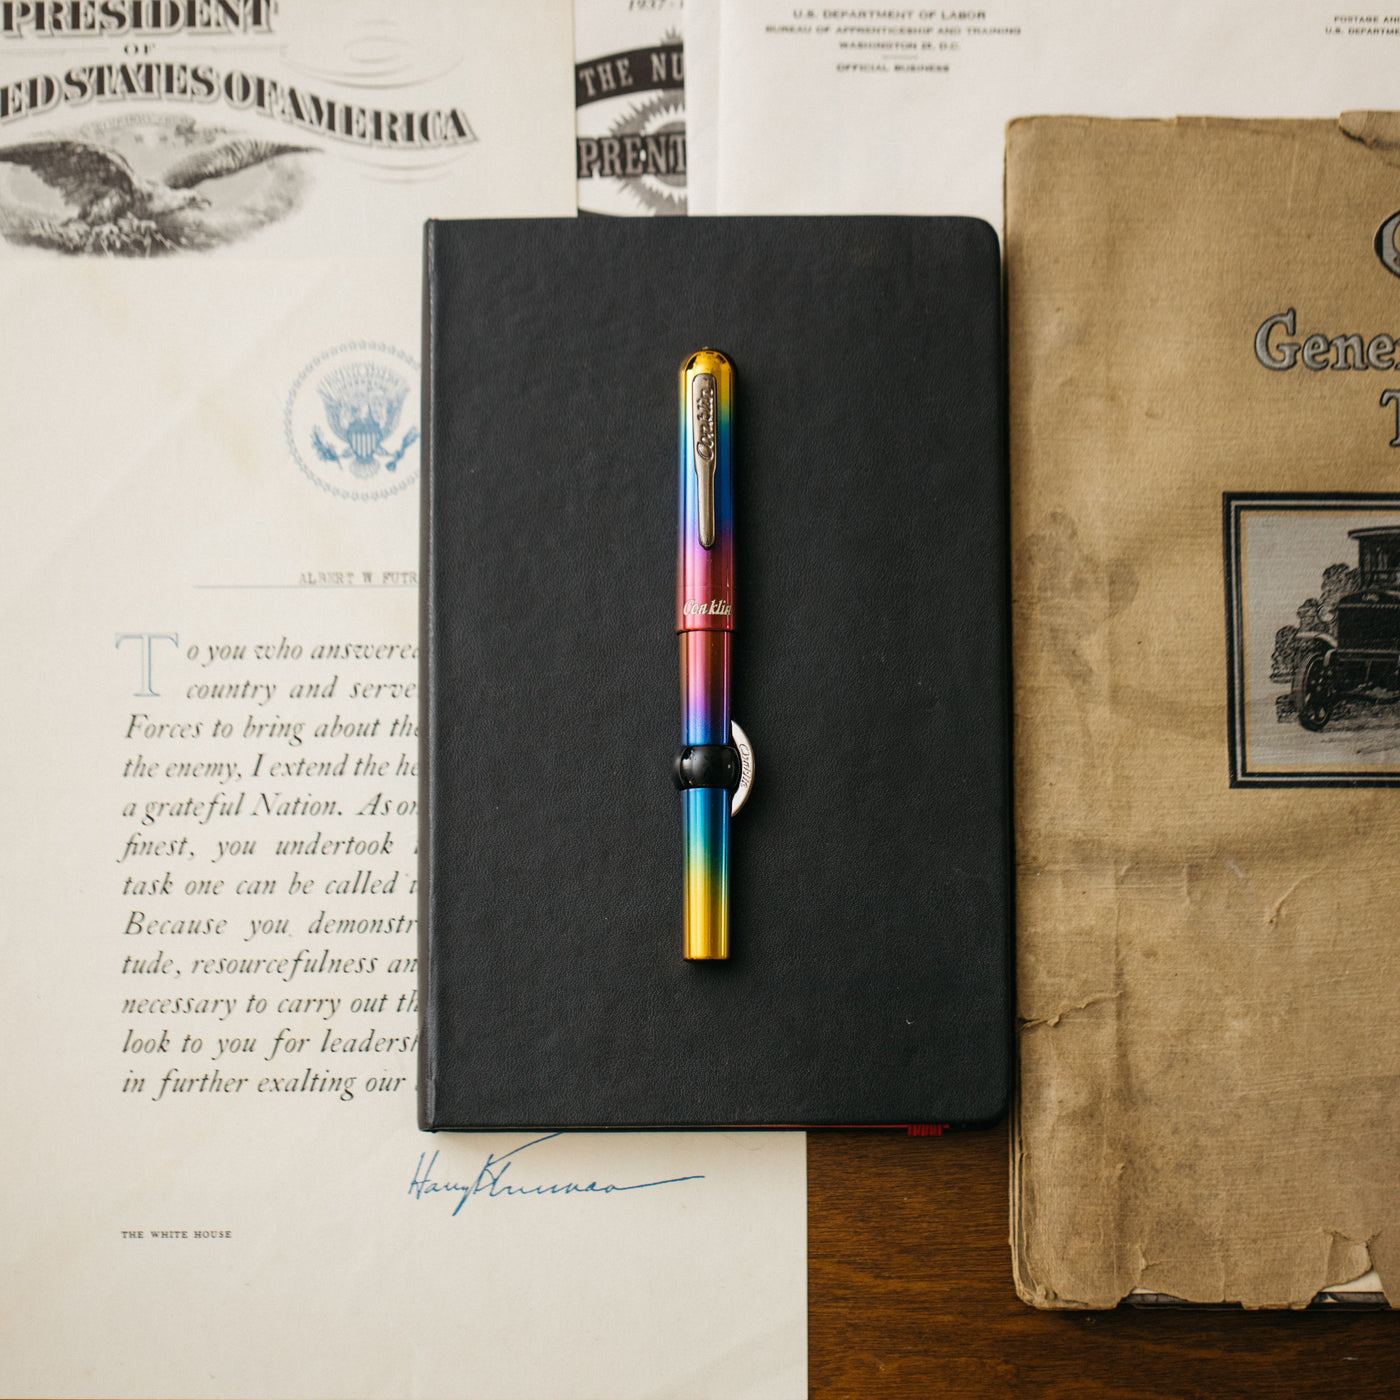 Conklin Mark Twain Crescent Filler Rainbow Fountain Pen